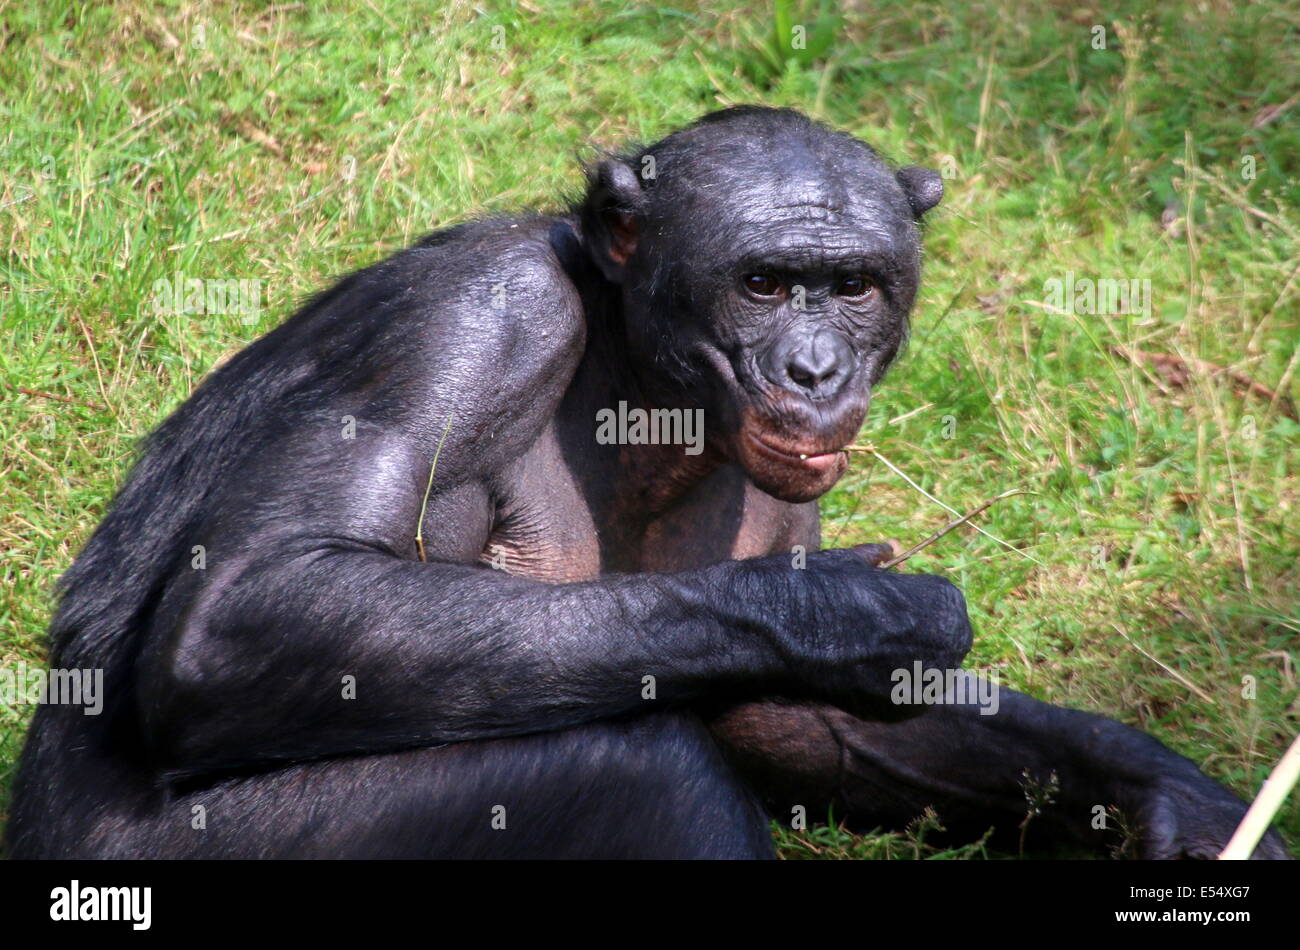 Macho maduro chimpancé bonobo (Pan paniscus) en un entorno natural Foto de stock